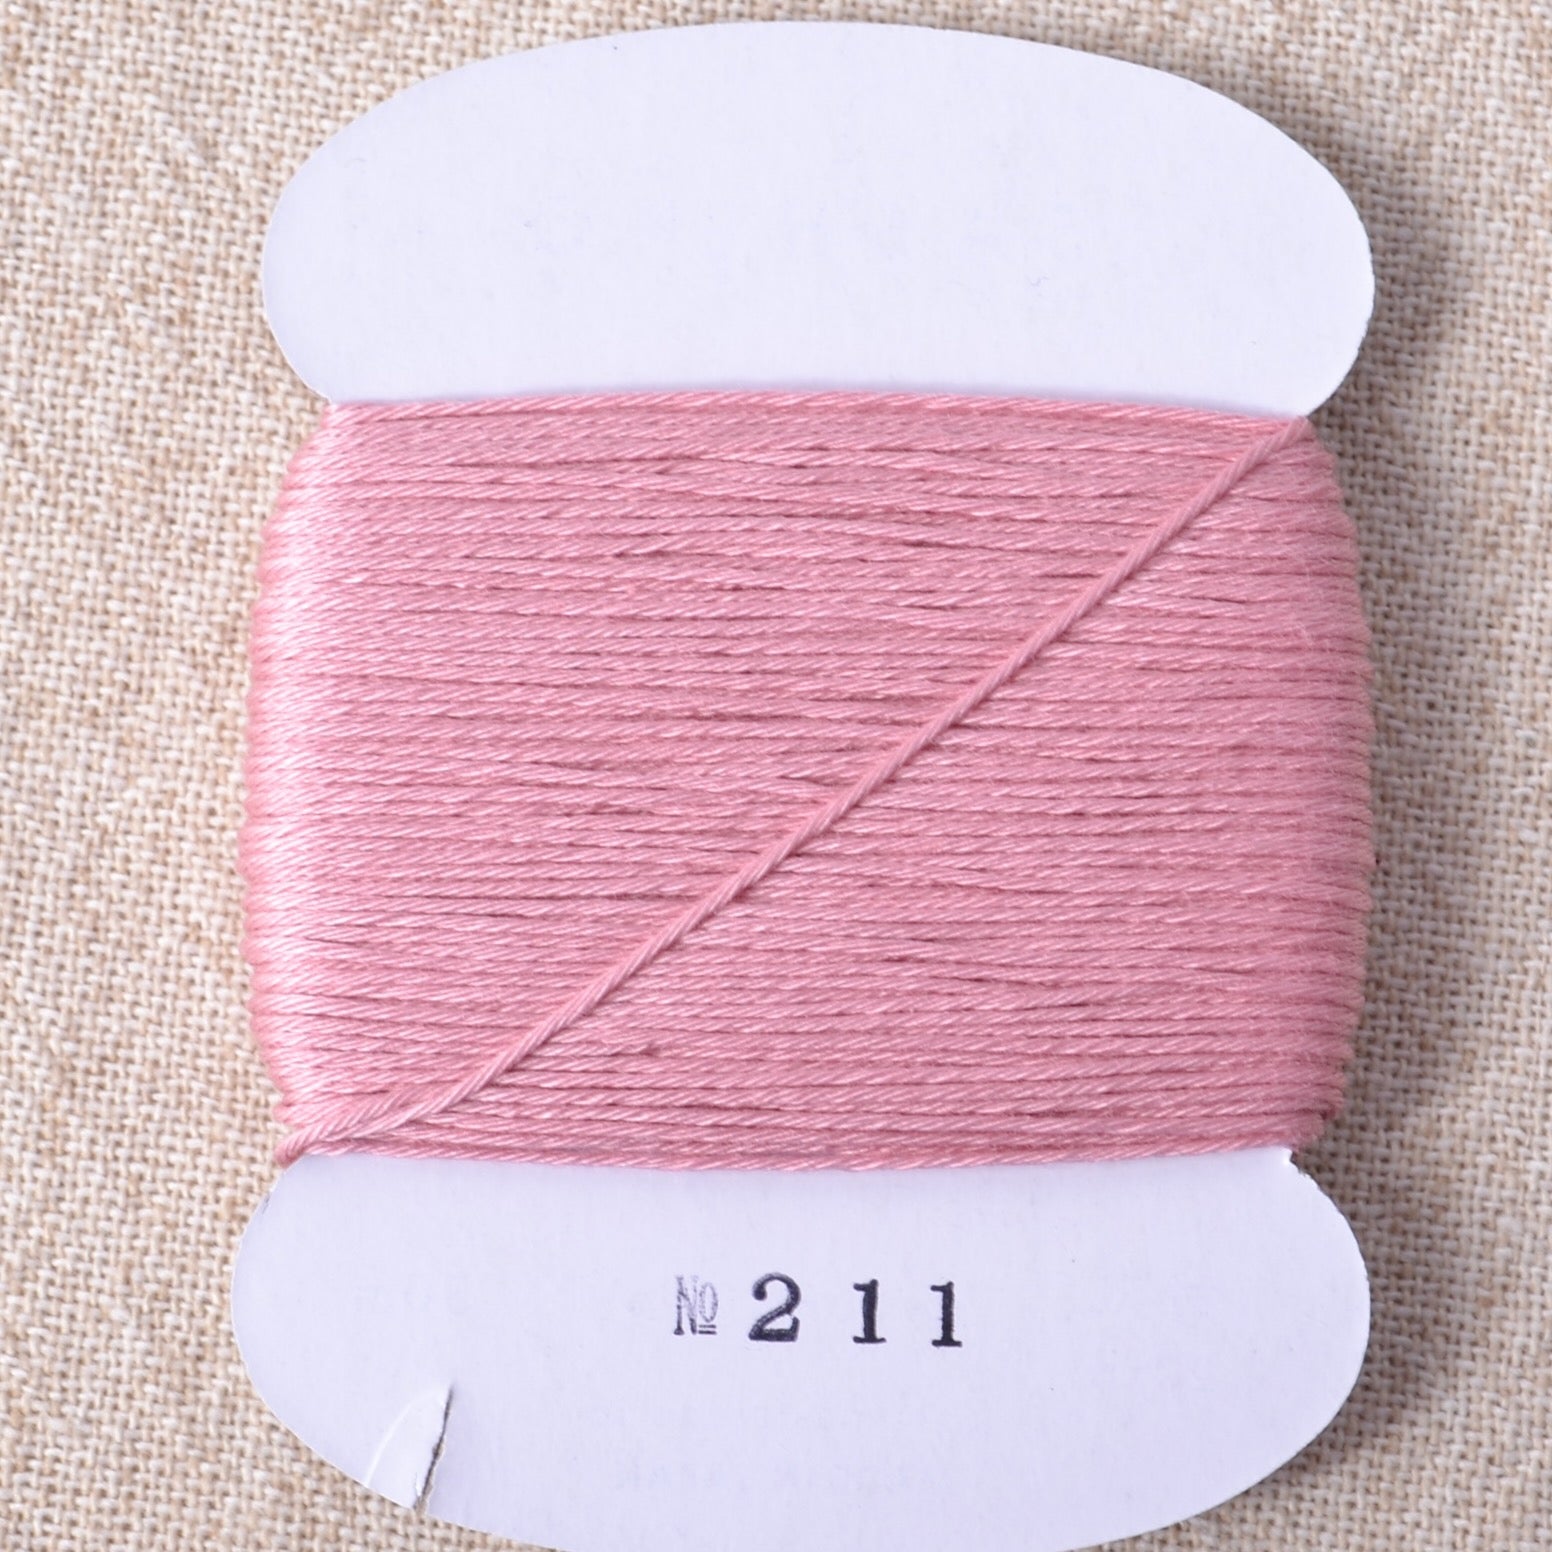 Daruma Sashiko Thread, Dusty Pink #211